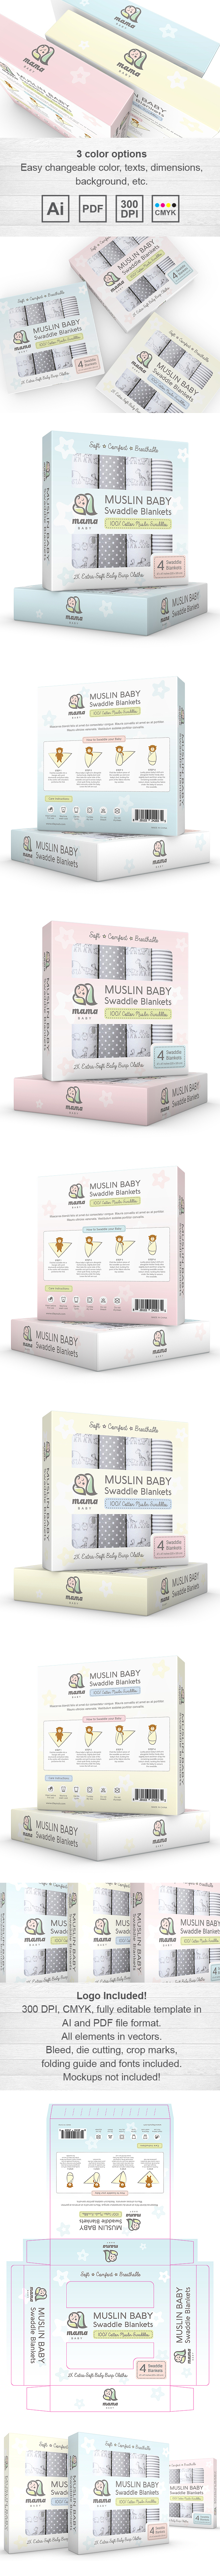 Muslin Baby Swaddle Blankets Packaging Template